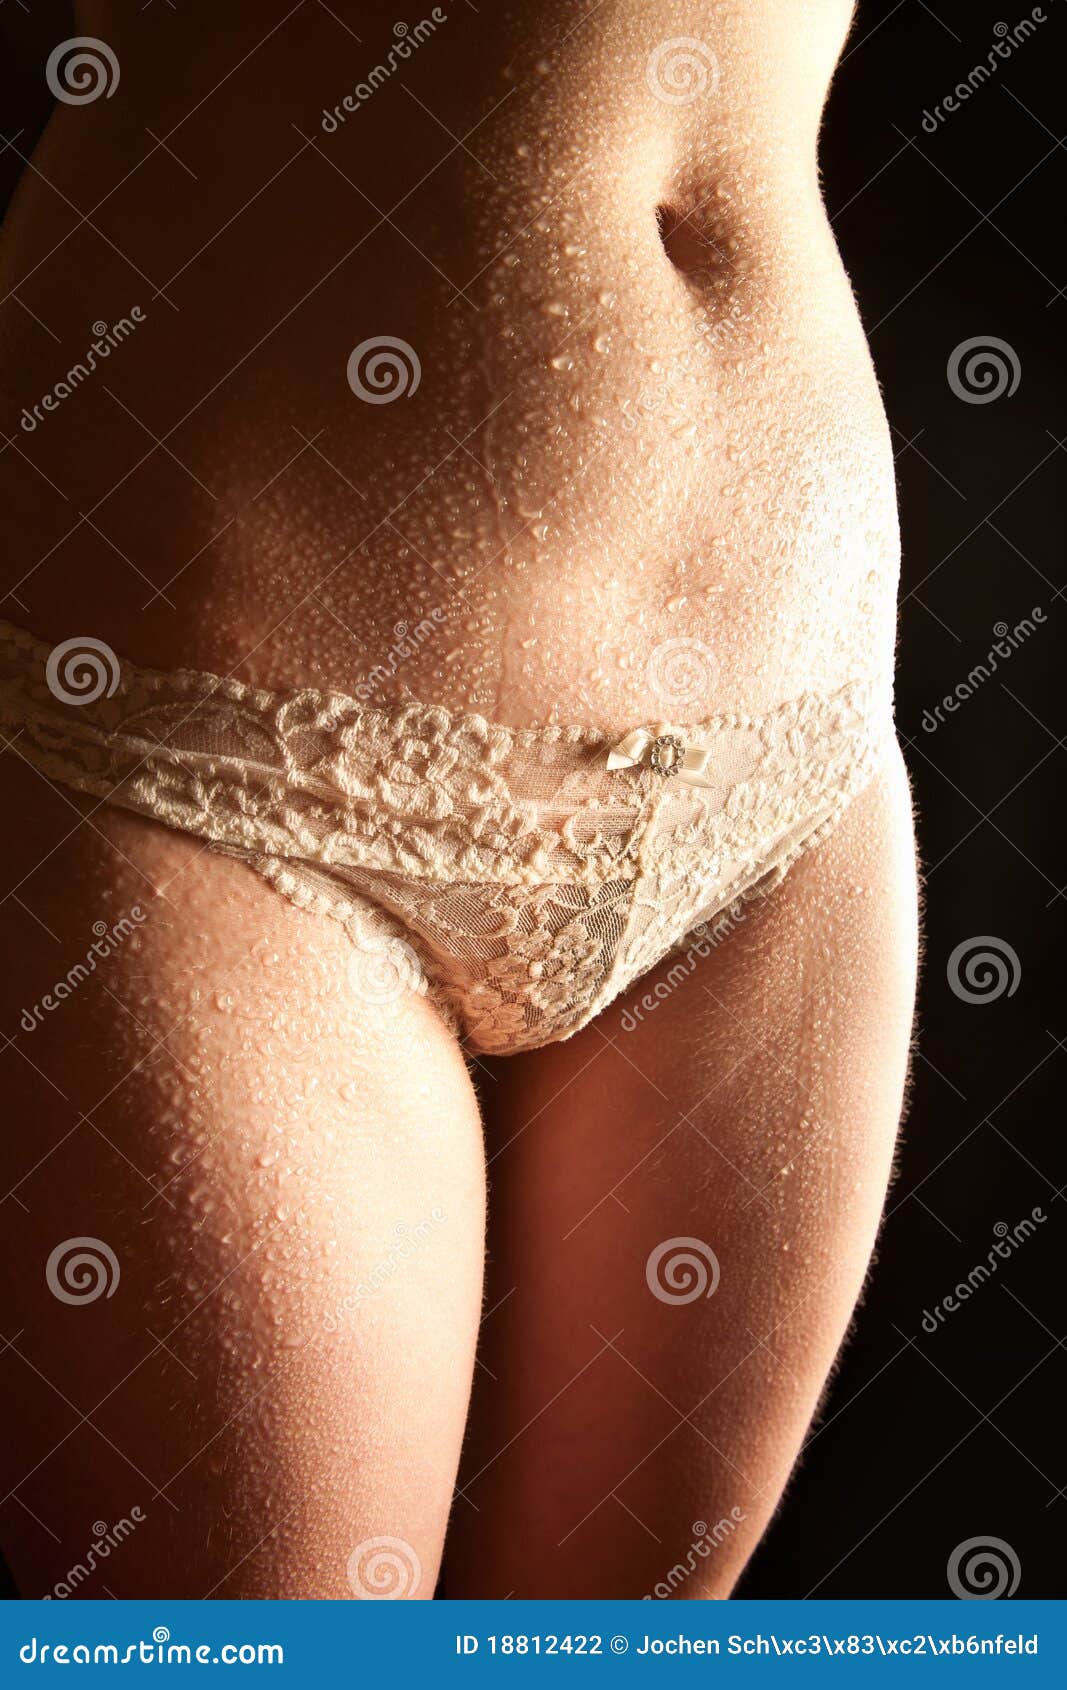 dan prindle add photo women in wet panties